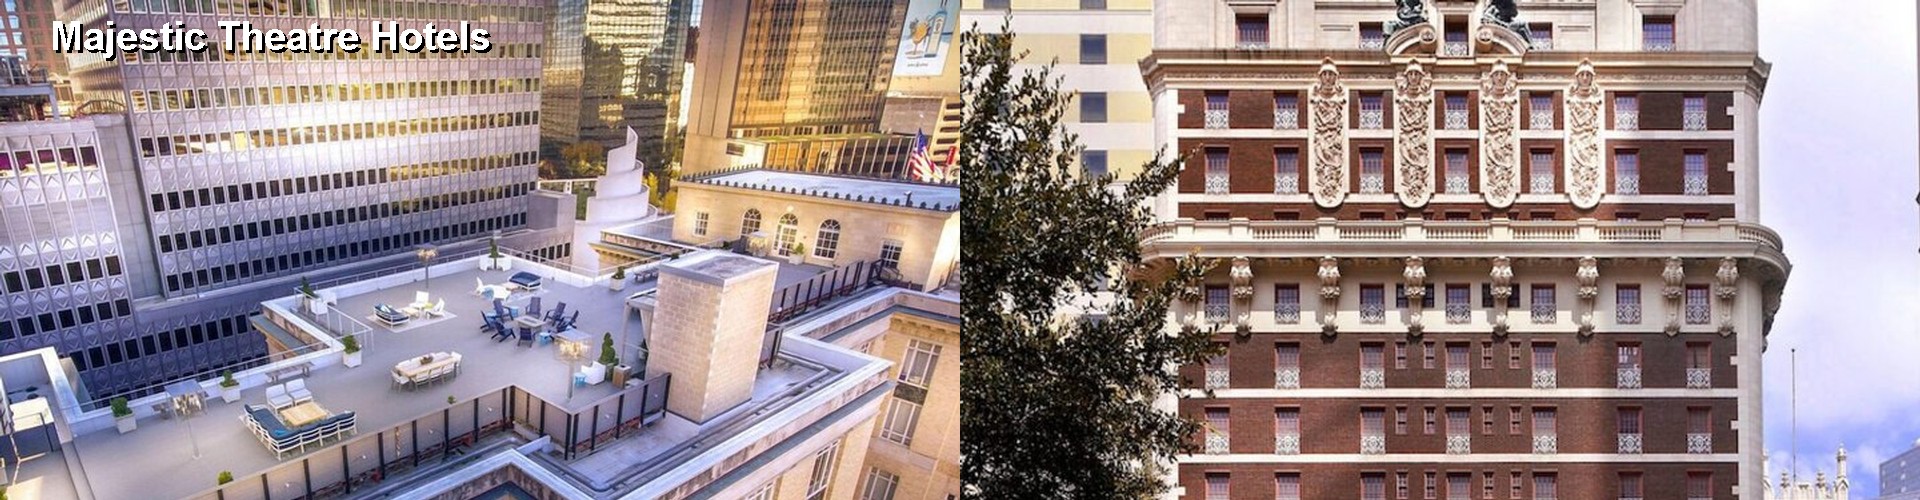 3 Best Hotels near Majestic Theatre